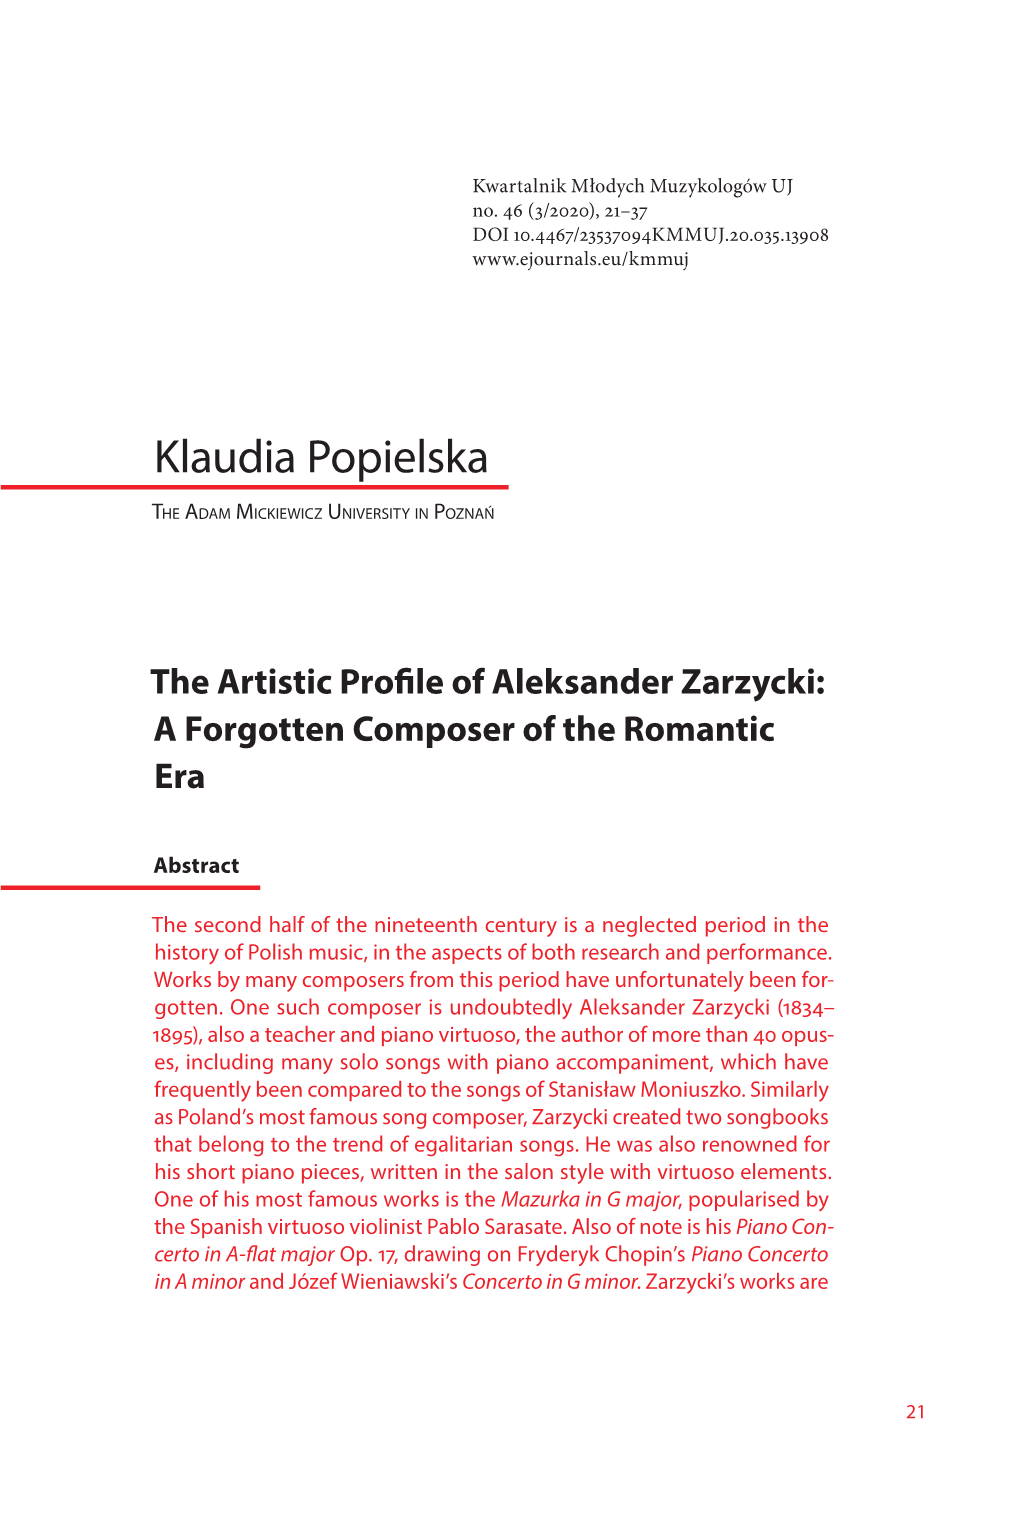 The Artistic Profile of Aleksander Zarzycki: a Forgotten Composer of the Romantic Era